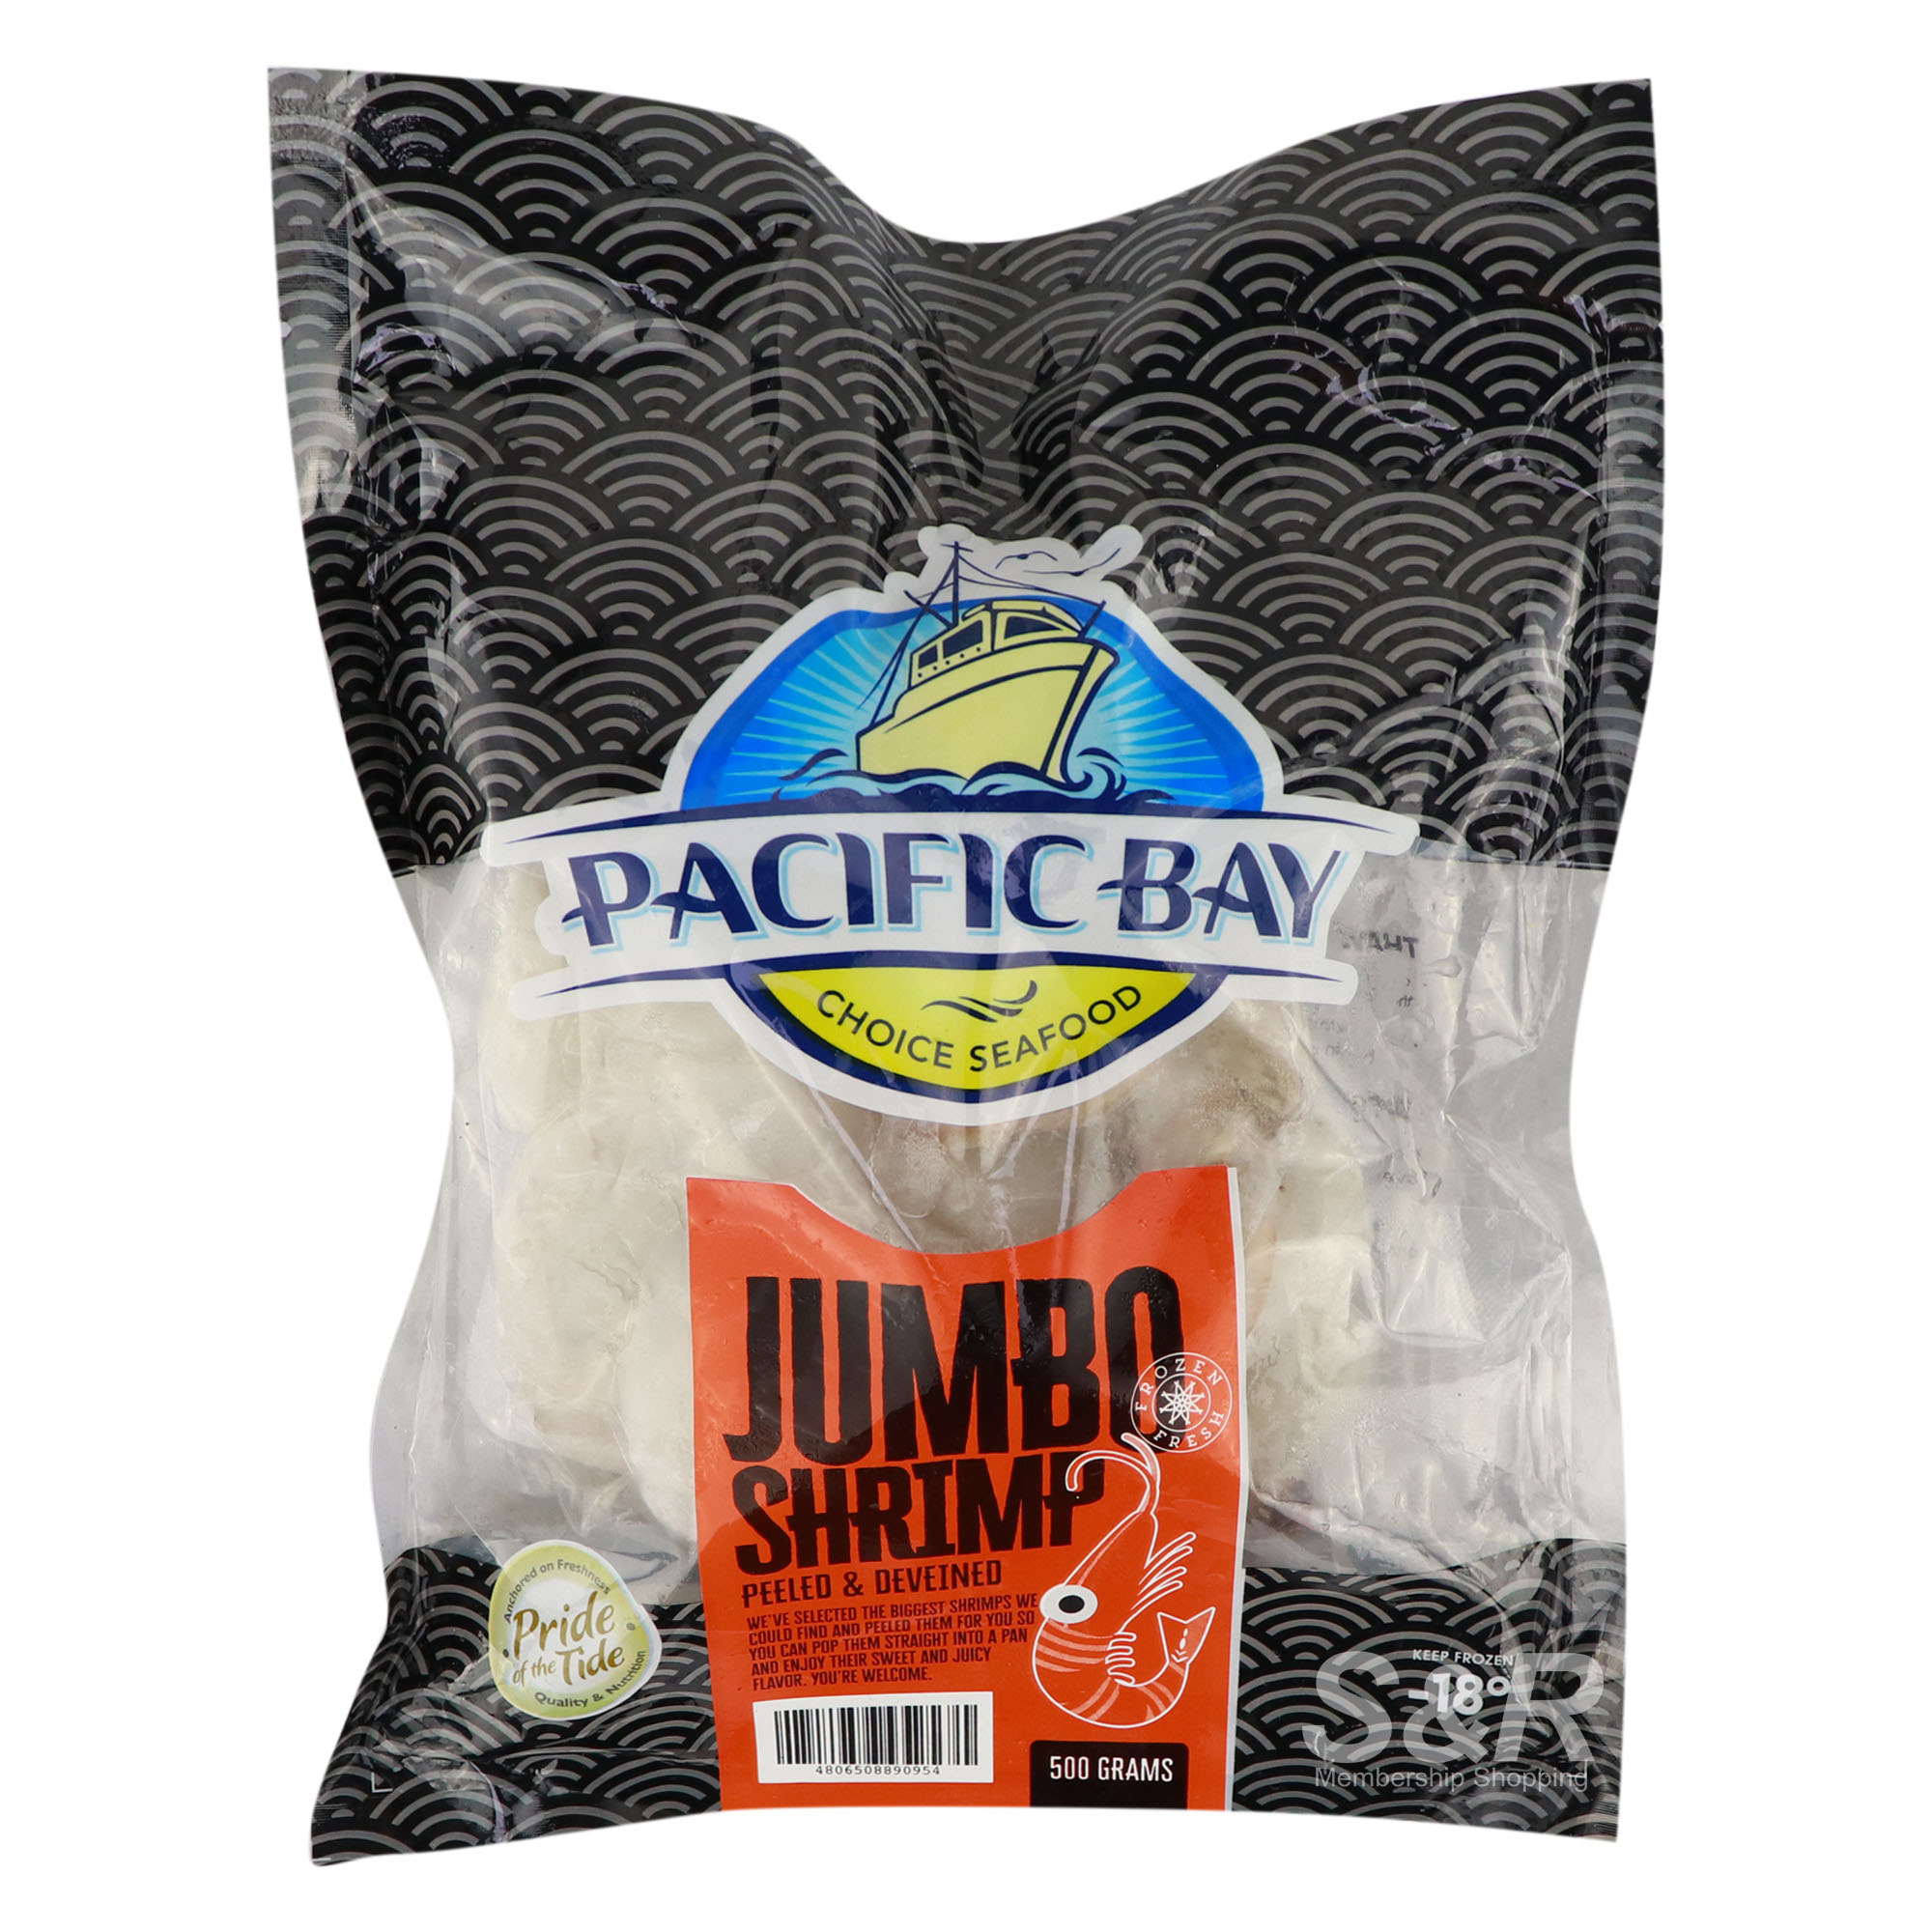 Pacific Bay Peeled and Deveined Jumbo Shrimp 500g